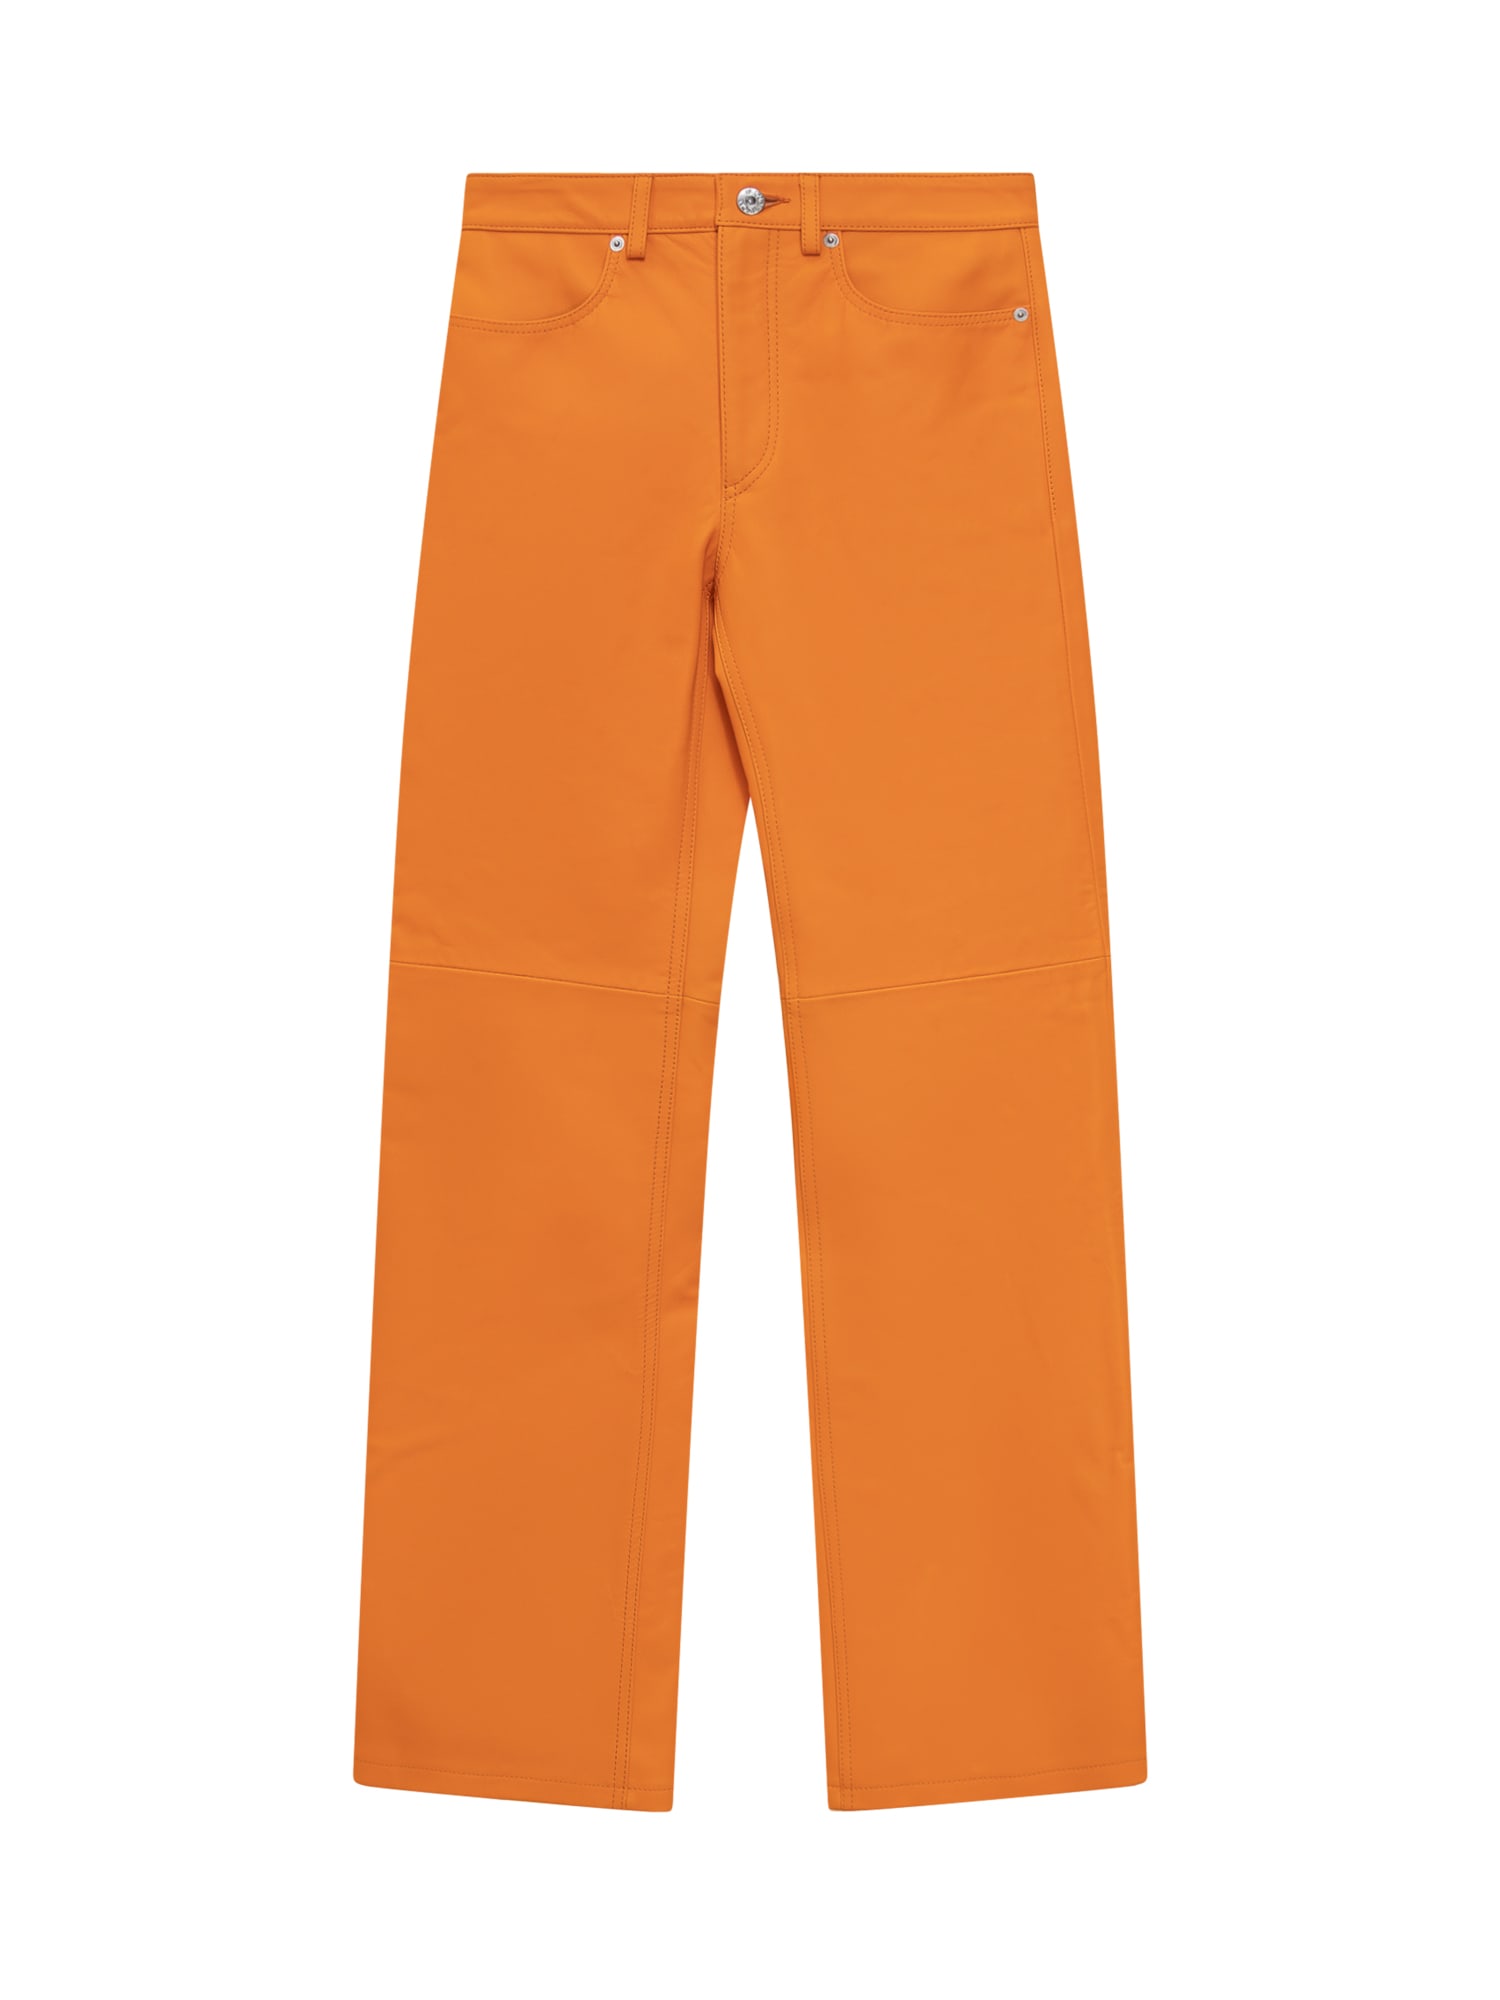 J.W. Anderson Orange Leather Pant